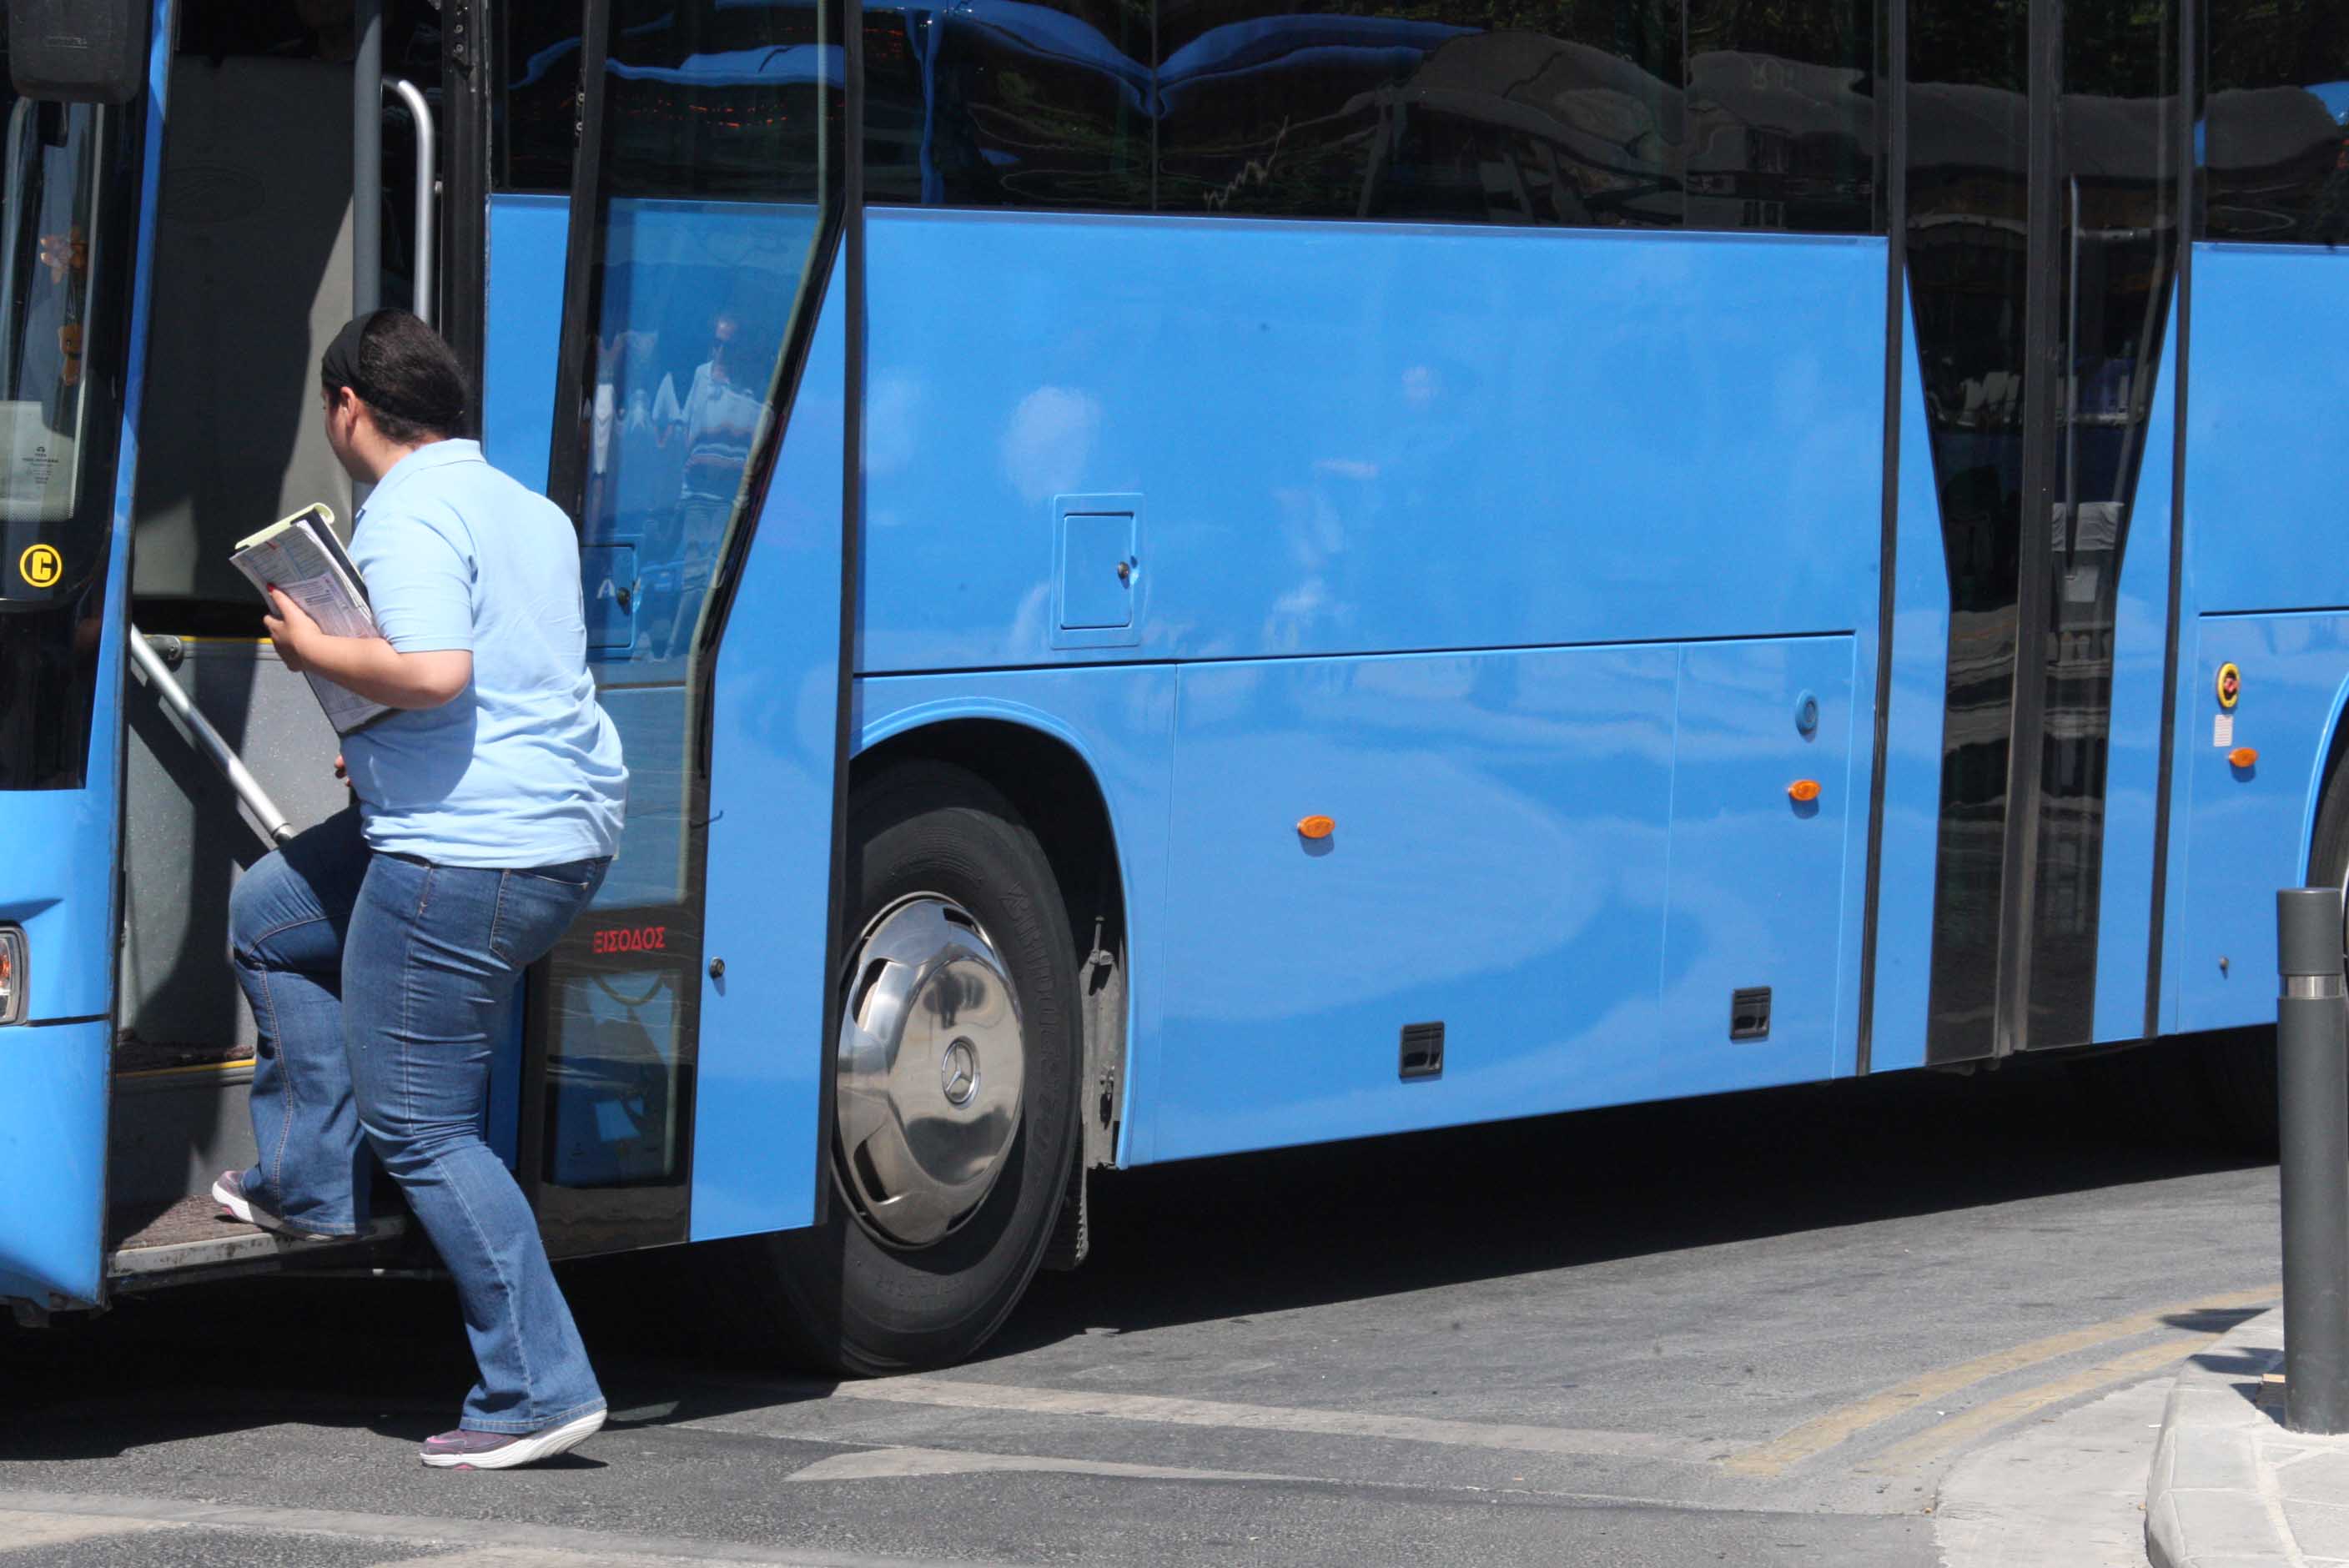 image Lack of bus drivers a ‘mega problem’, minister says